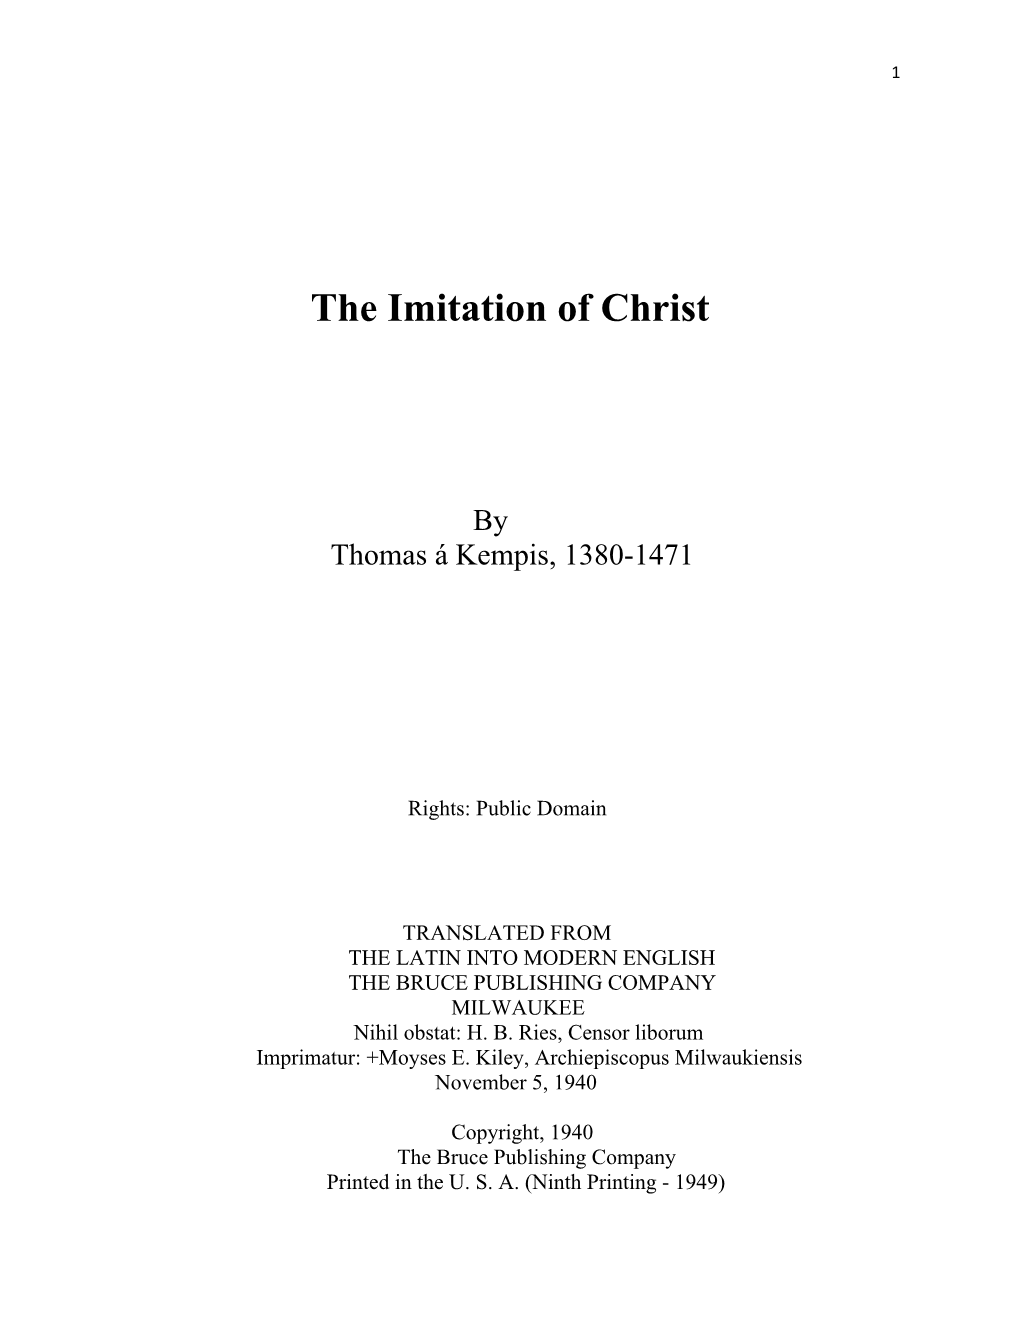 Thomas a Kempis, Imitation of Christ